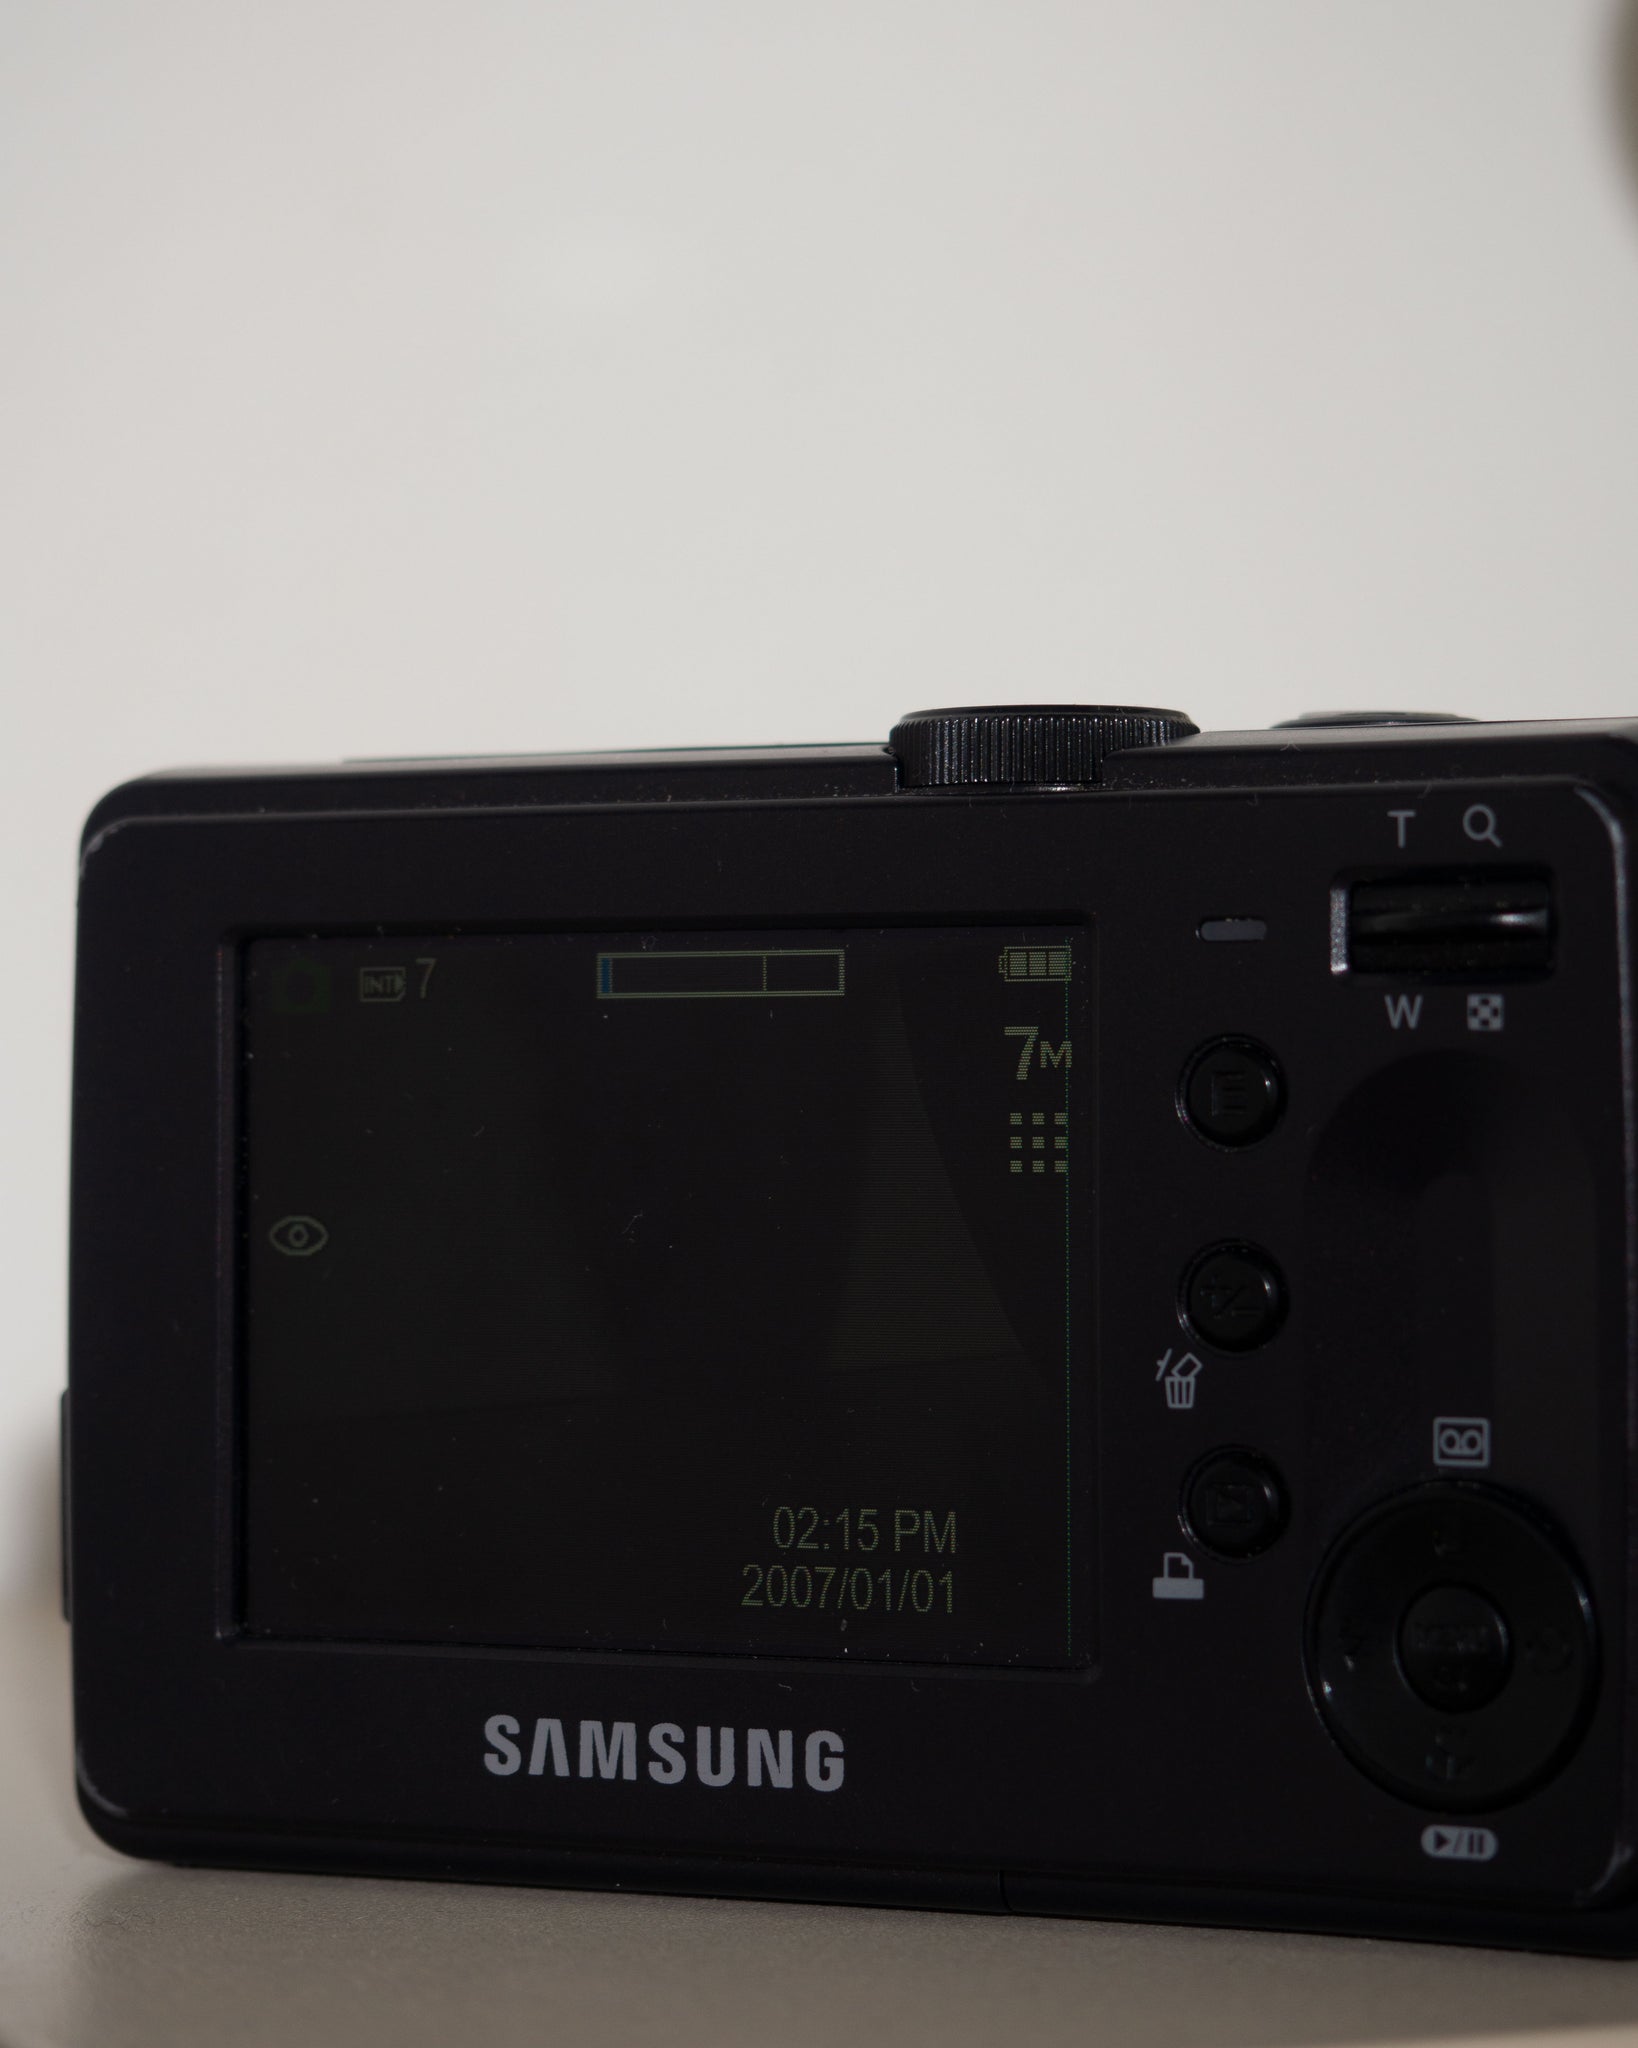 Samsung S730 Digital Compact